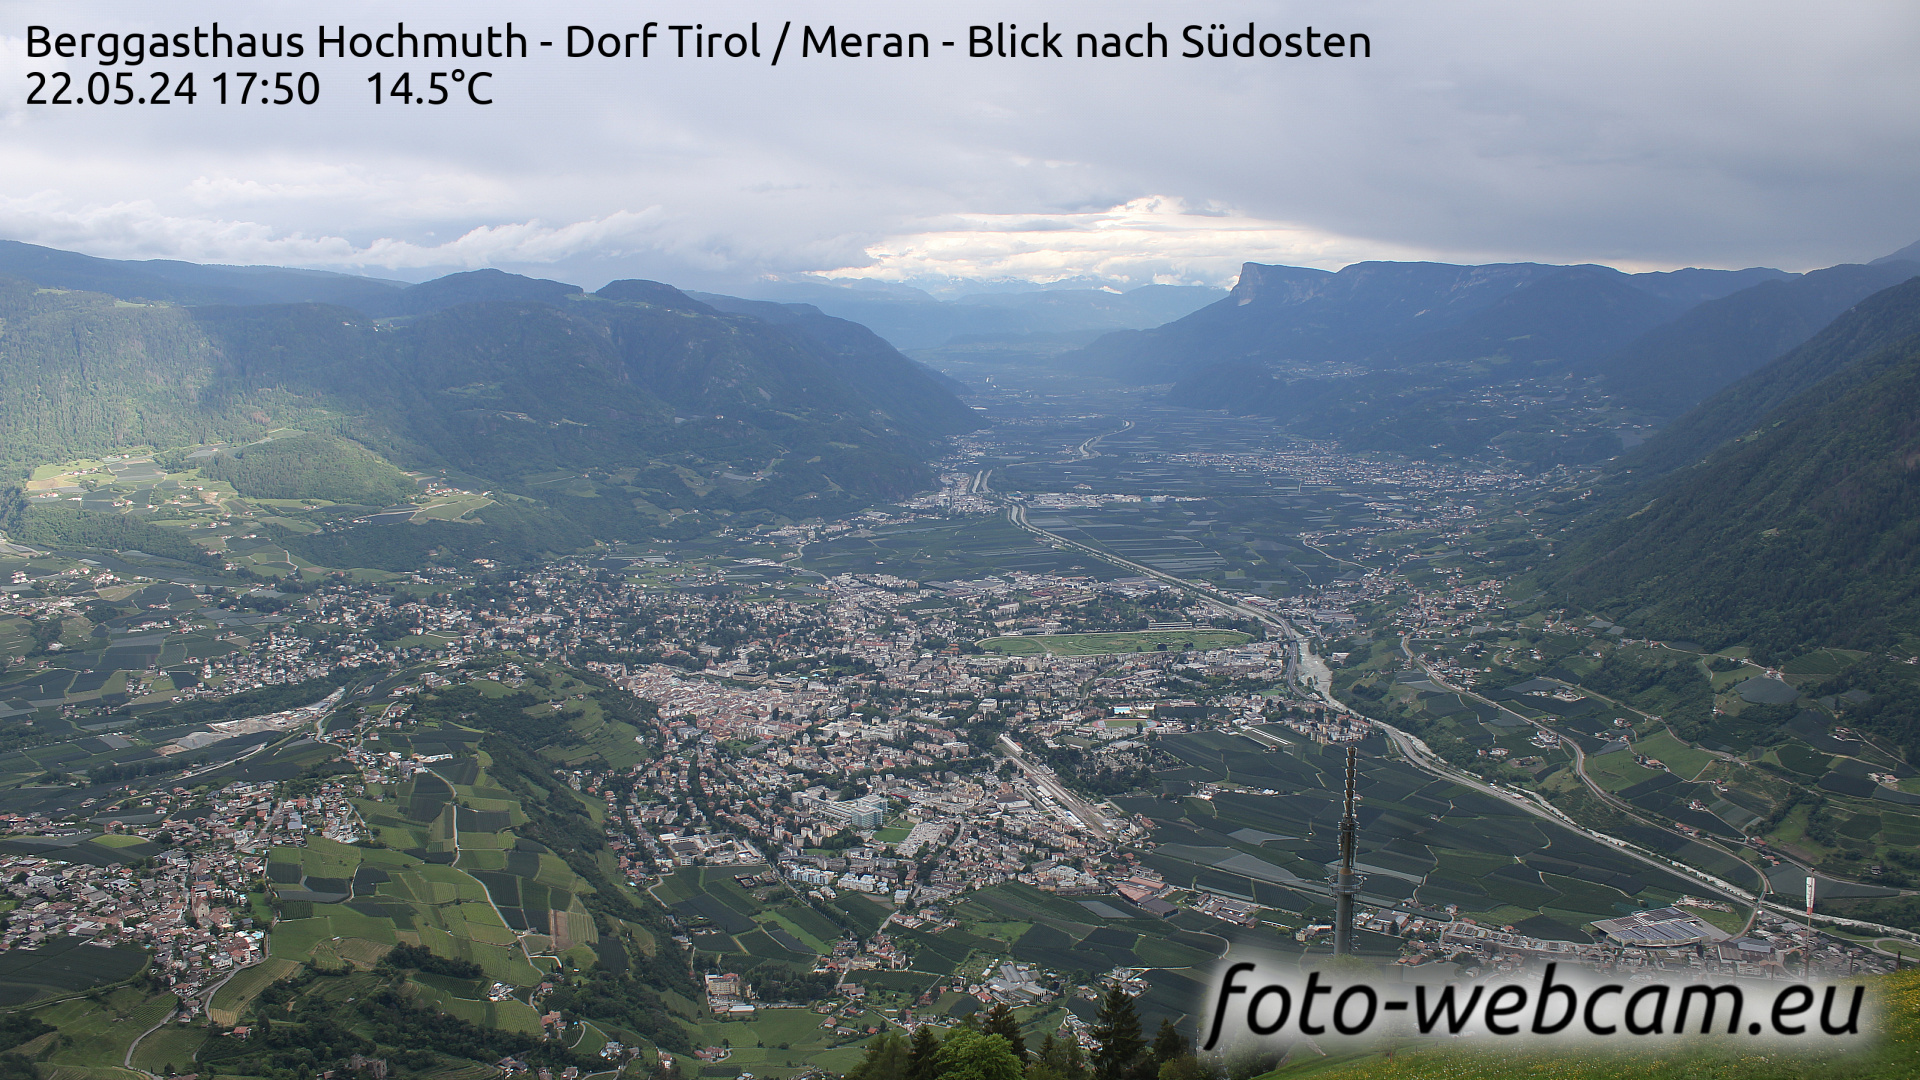 Dorf Tirol Ma. 17:56